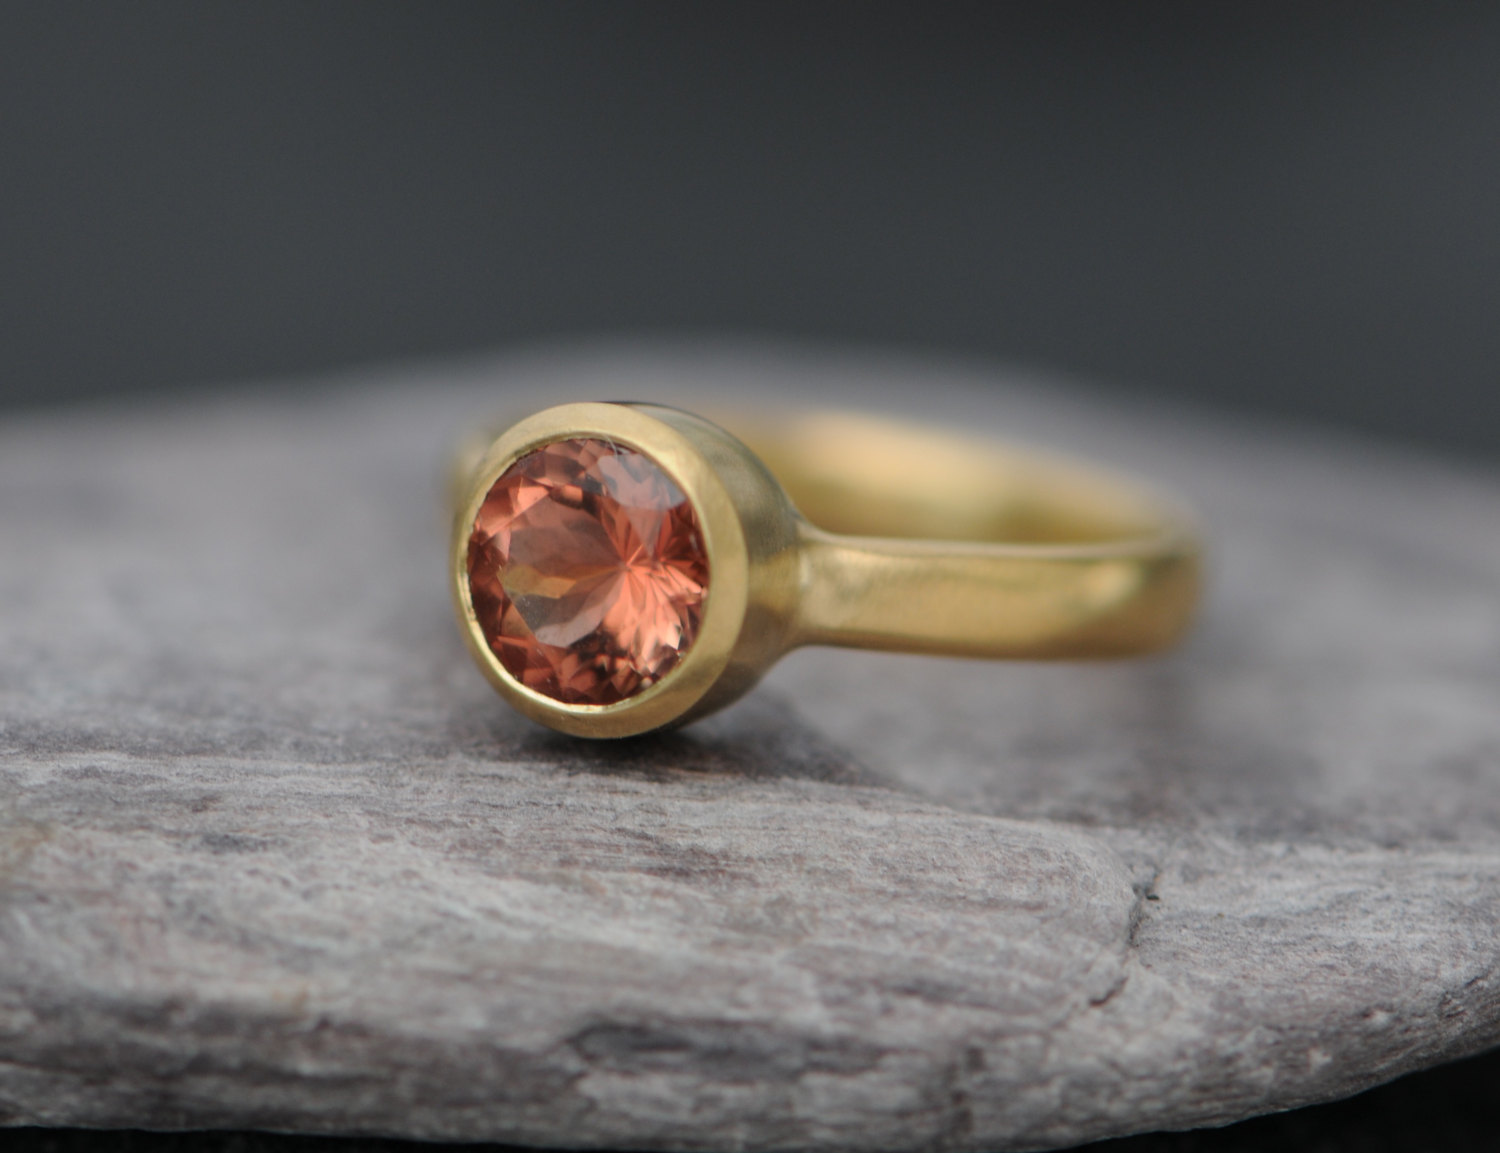 oregon sunstone solitaire set in simple gold ring design